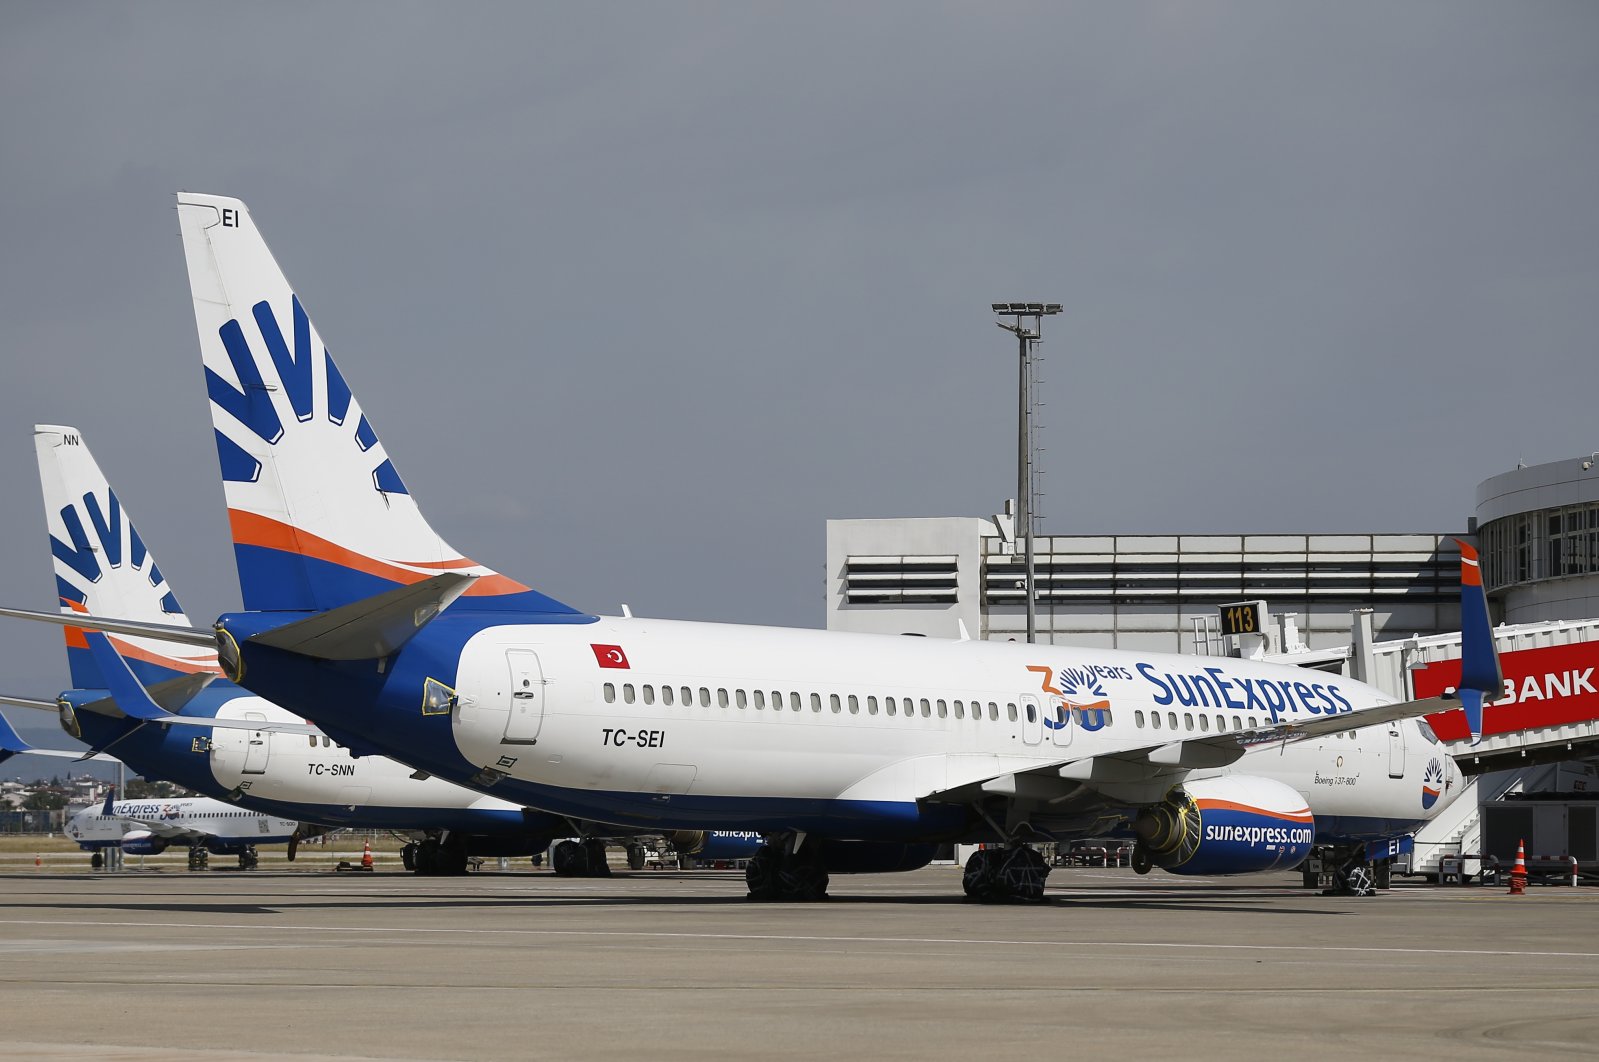 SunExpress planes are seen at Antalya Airport, in Antalya province, southern Turkey, May 31, 2020. (AA Photo)